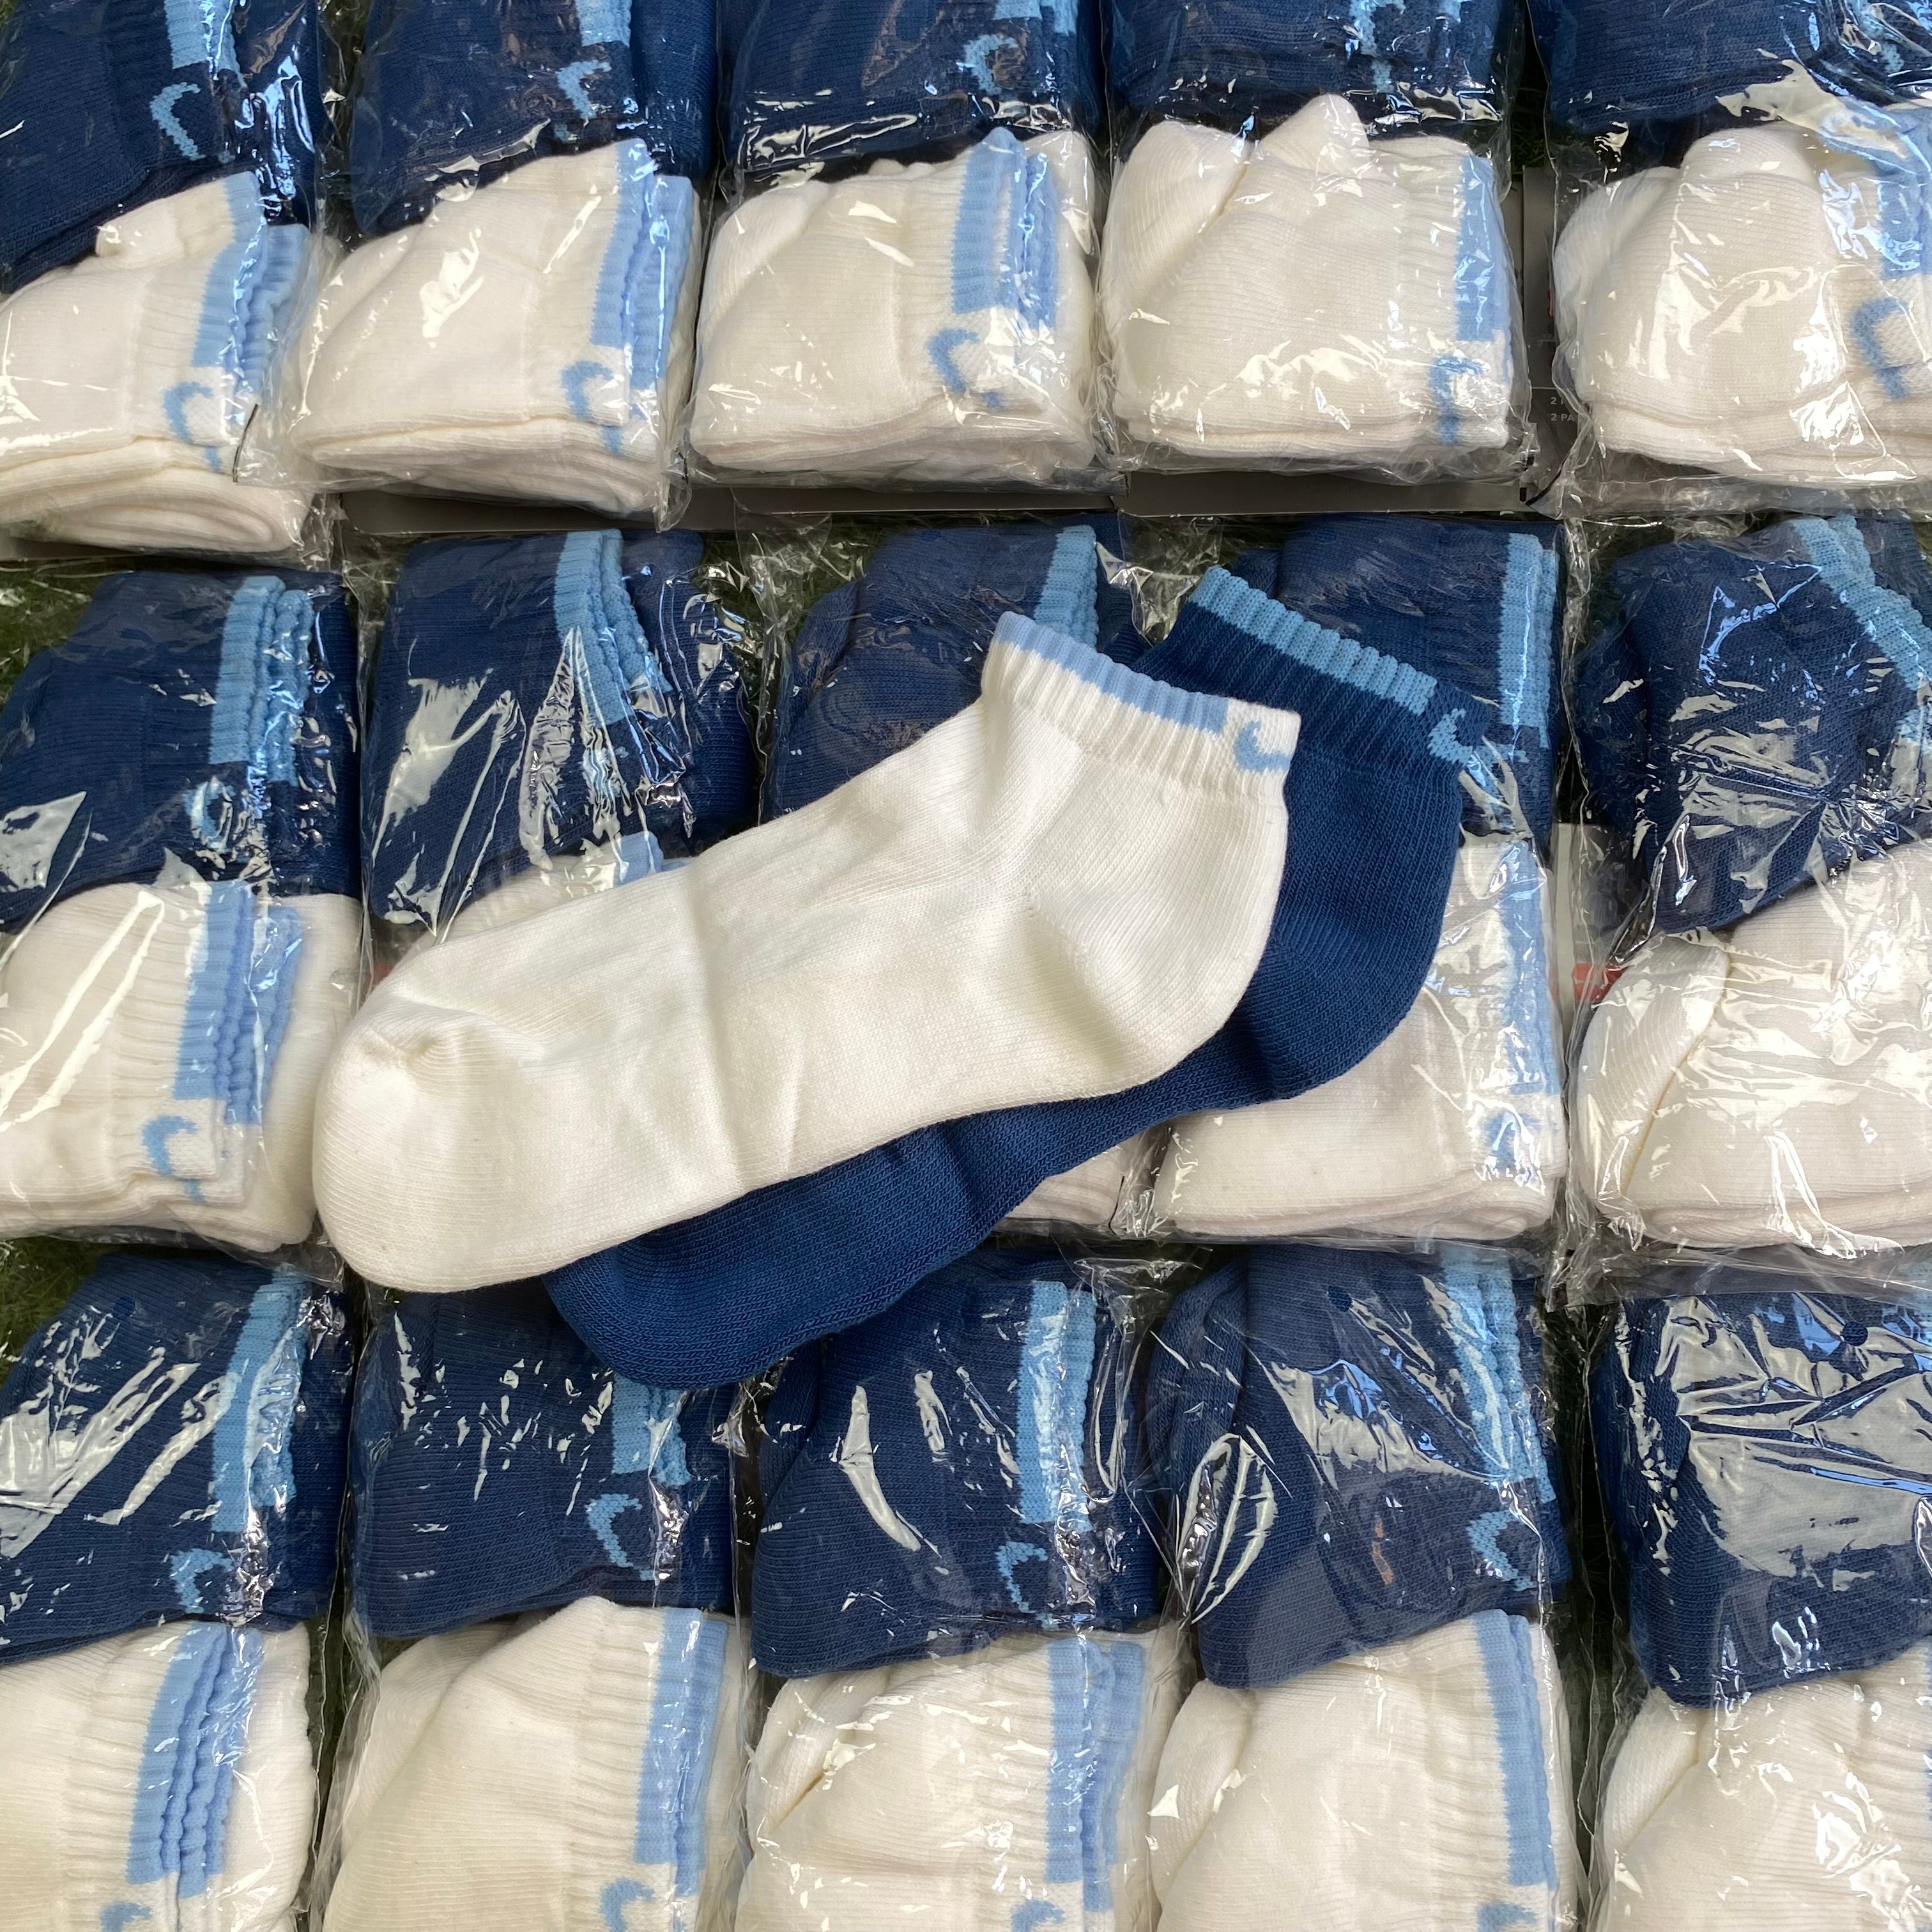 Vintage Nike Trainer Socks 2 Pack White Baby Blue